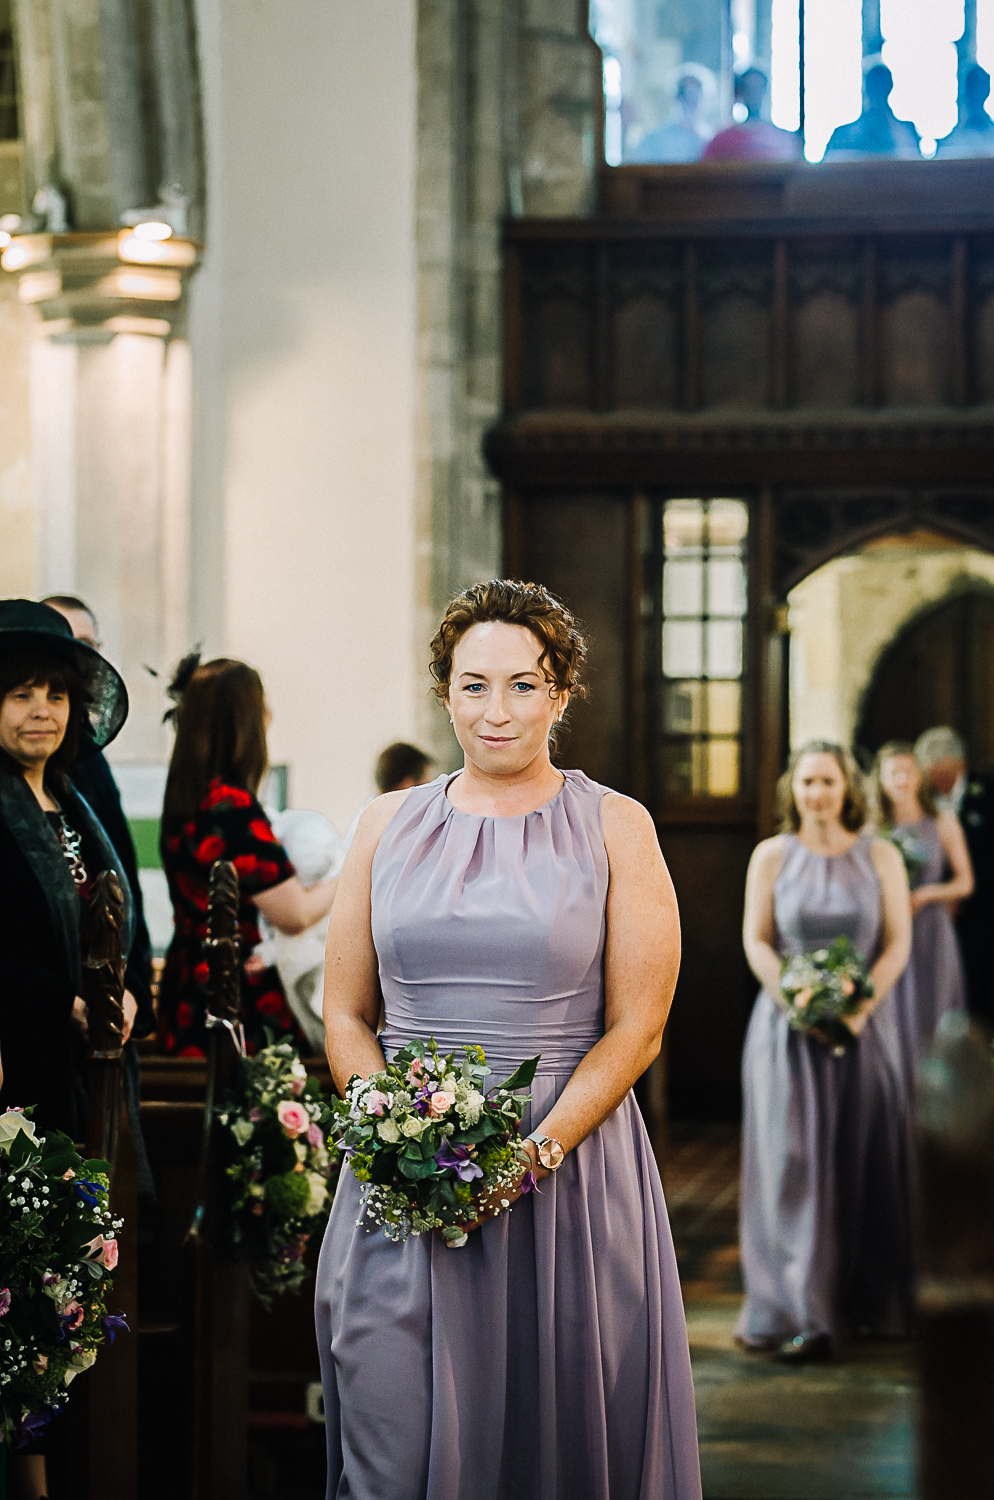 Bridesmaid Walking Down the Aisle at Cottenham All Saint’s Church - Swynford Manor Wedding Photographer